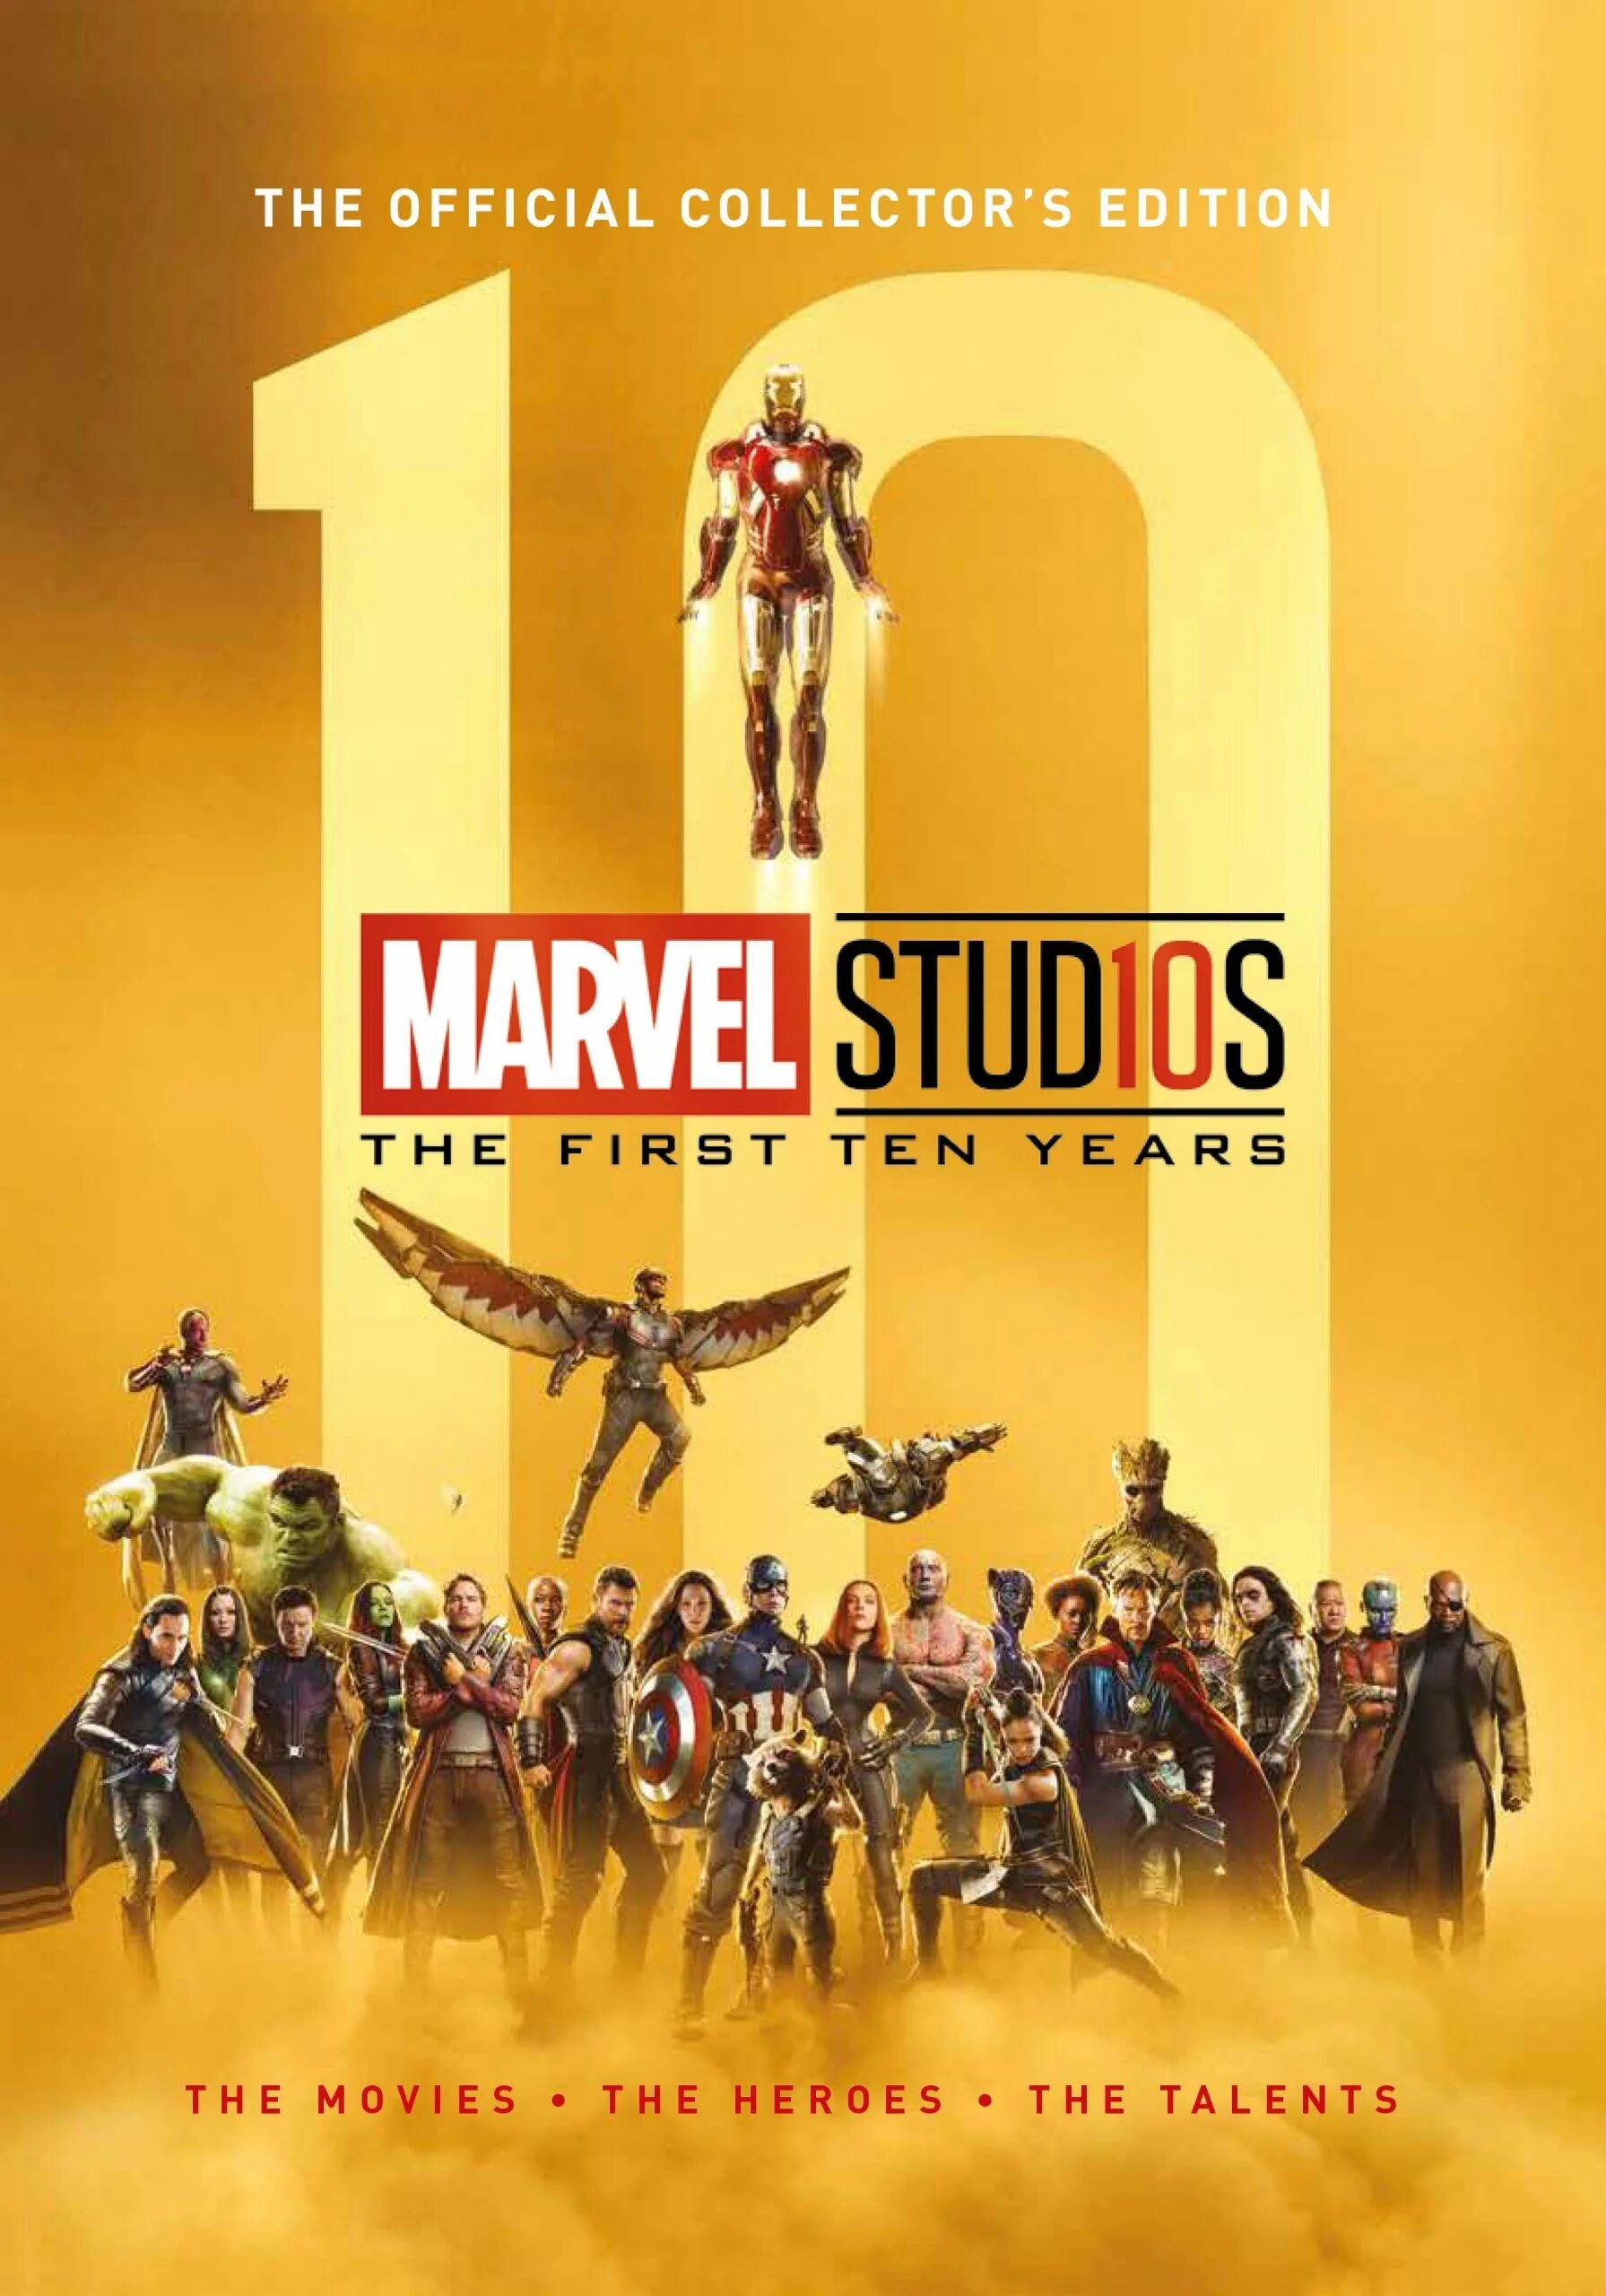 Poster 10. Плакат the Marvel Studios 10 years. Марвел Студиос 10 лет. Марвел Студиос герои. Марвел Студиос the first ten years book.